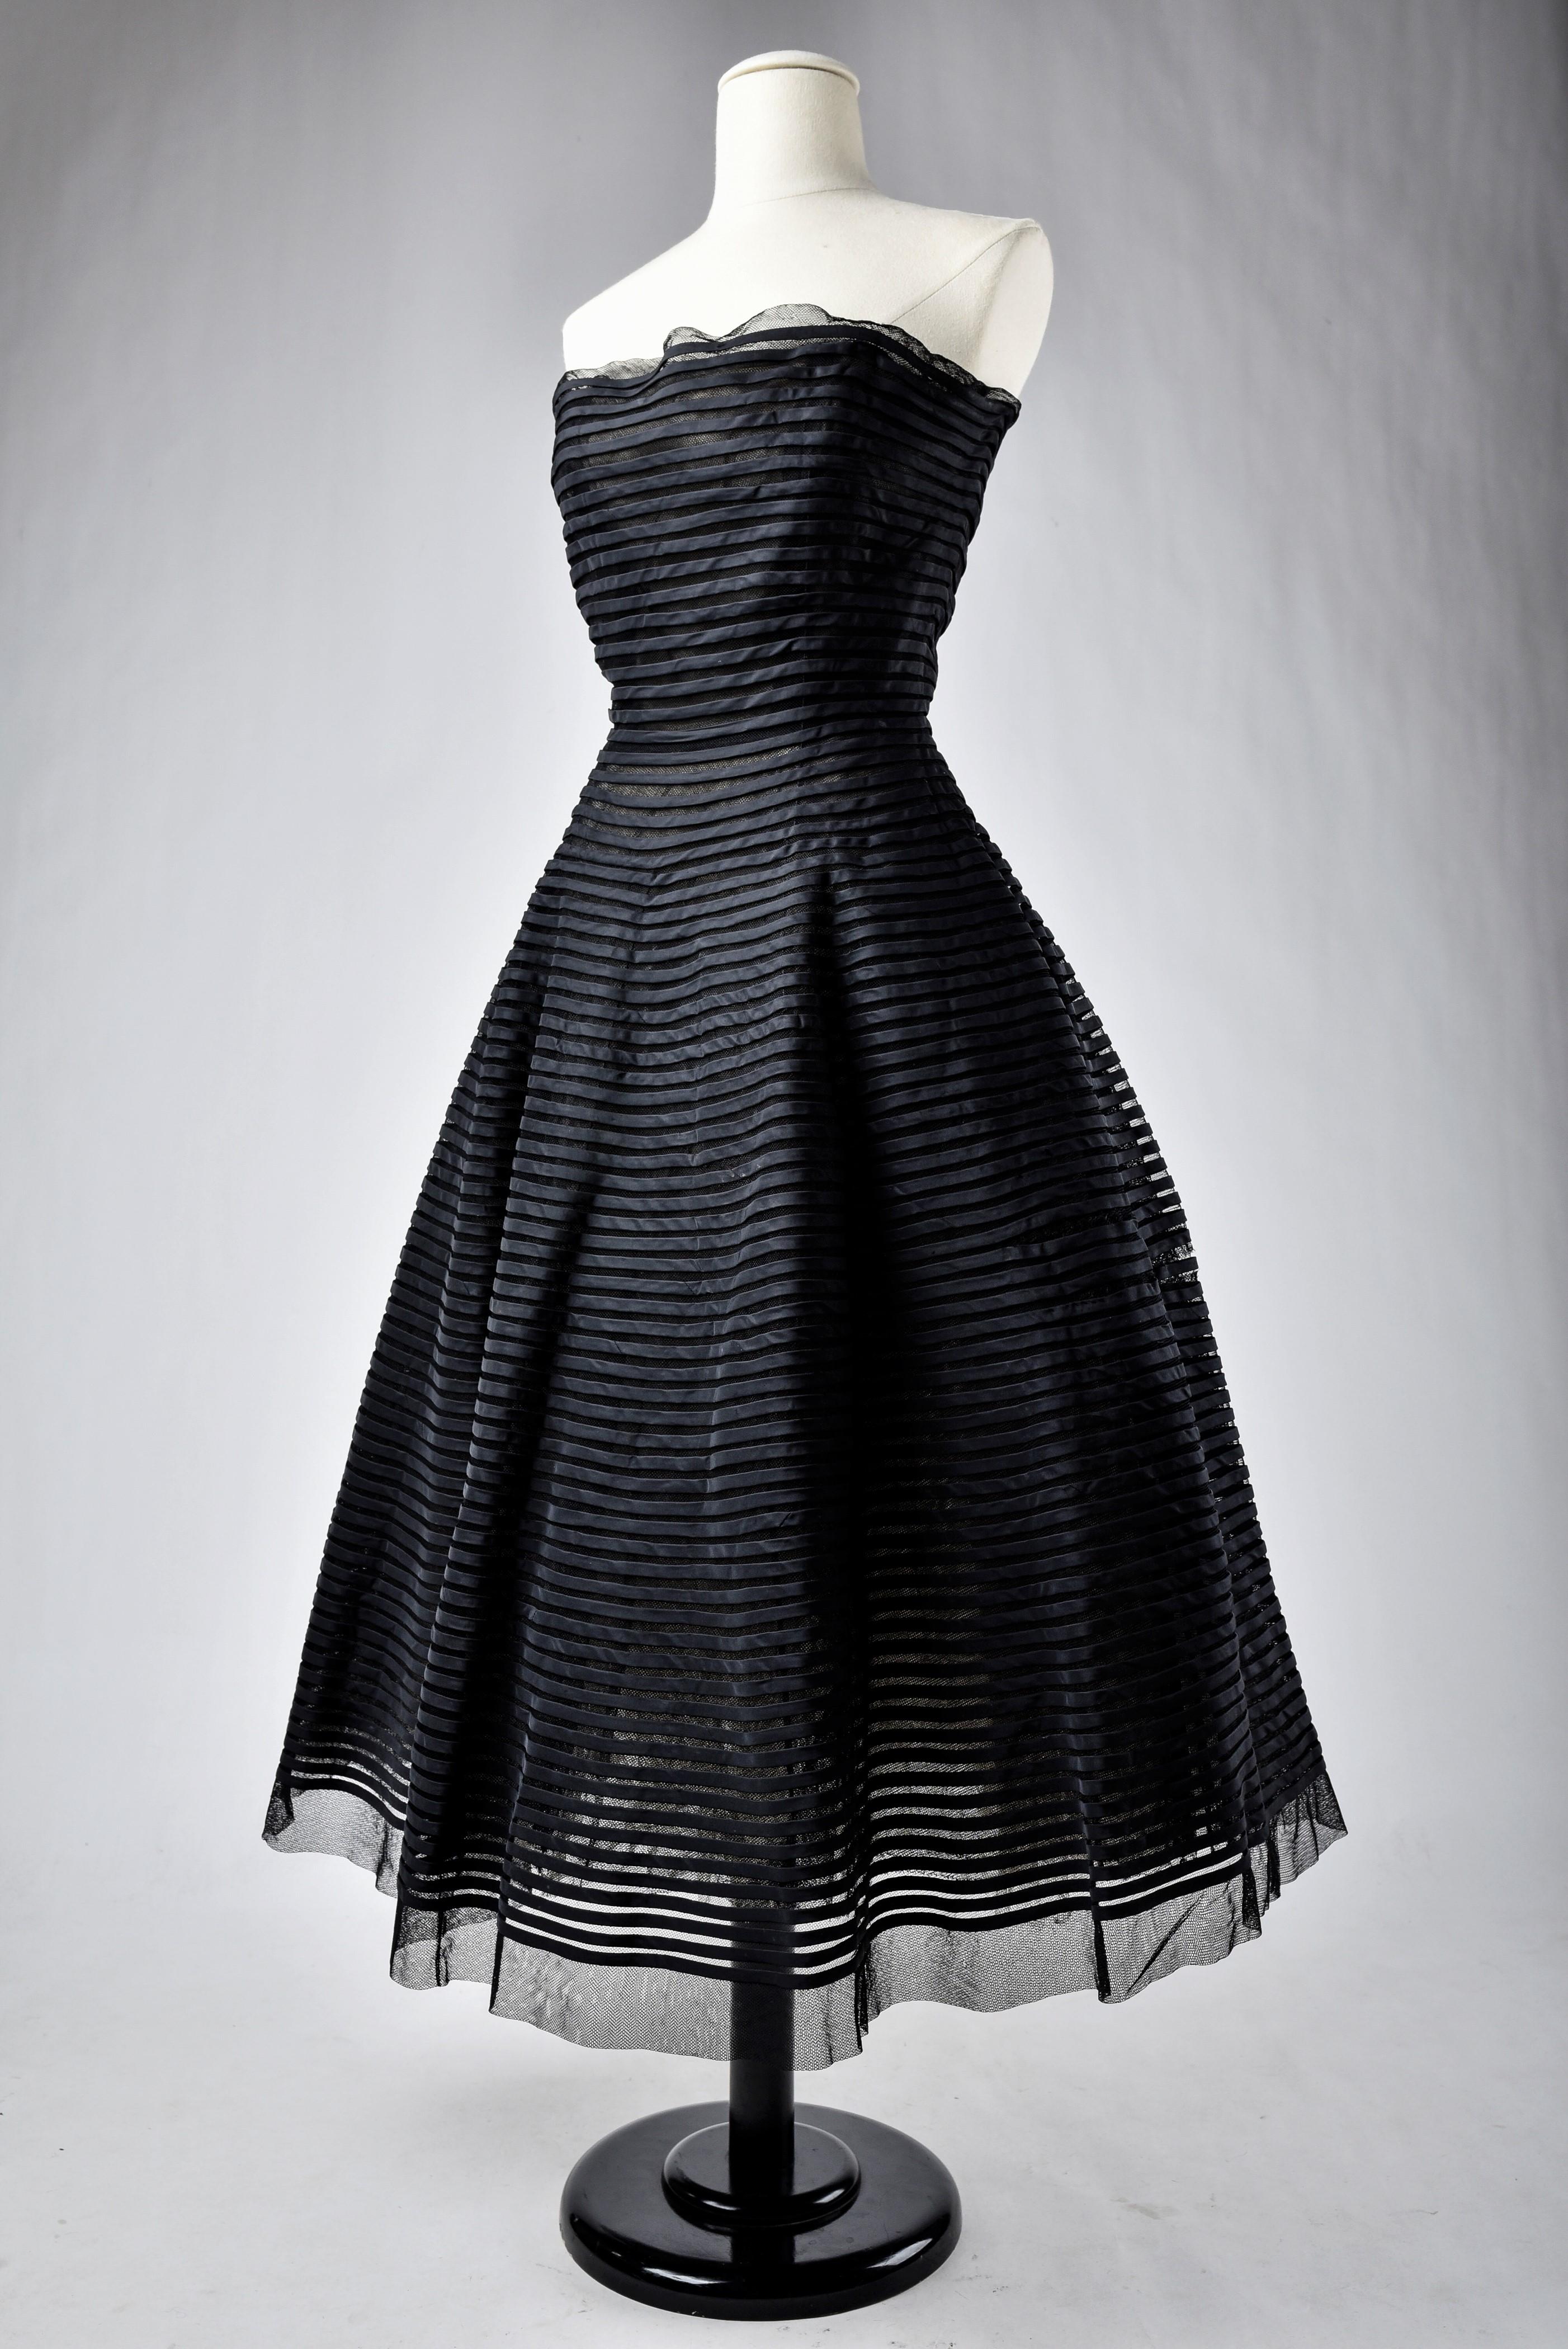 Christian Dior Ball Gown in black tulle & satin appliqué N° 363404 Circa 1955 4